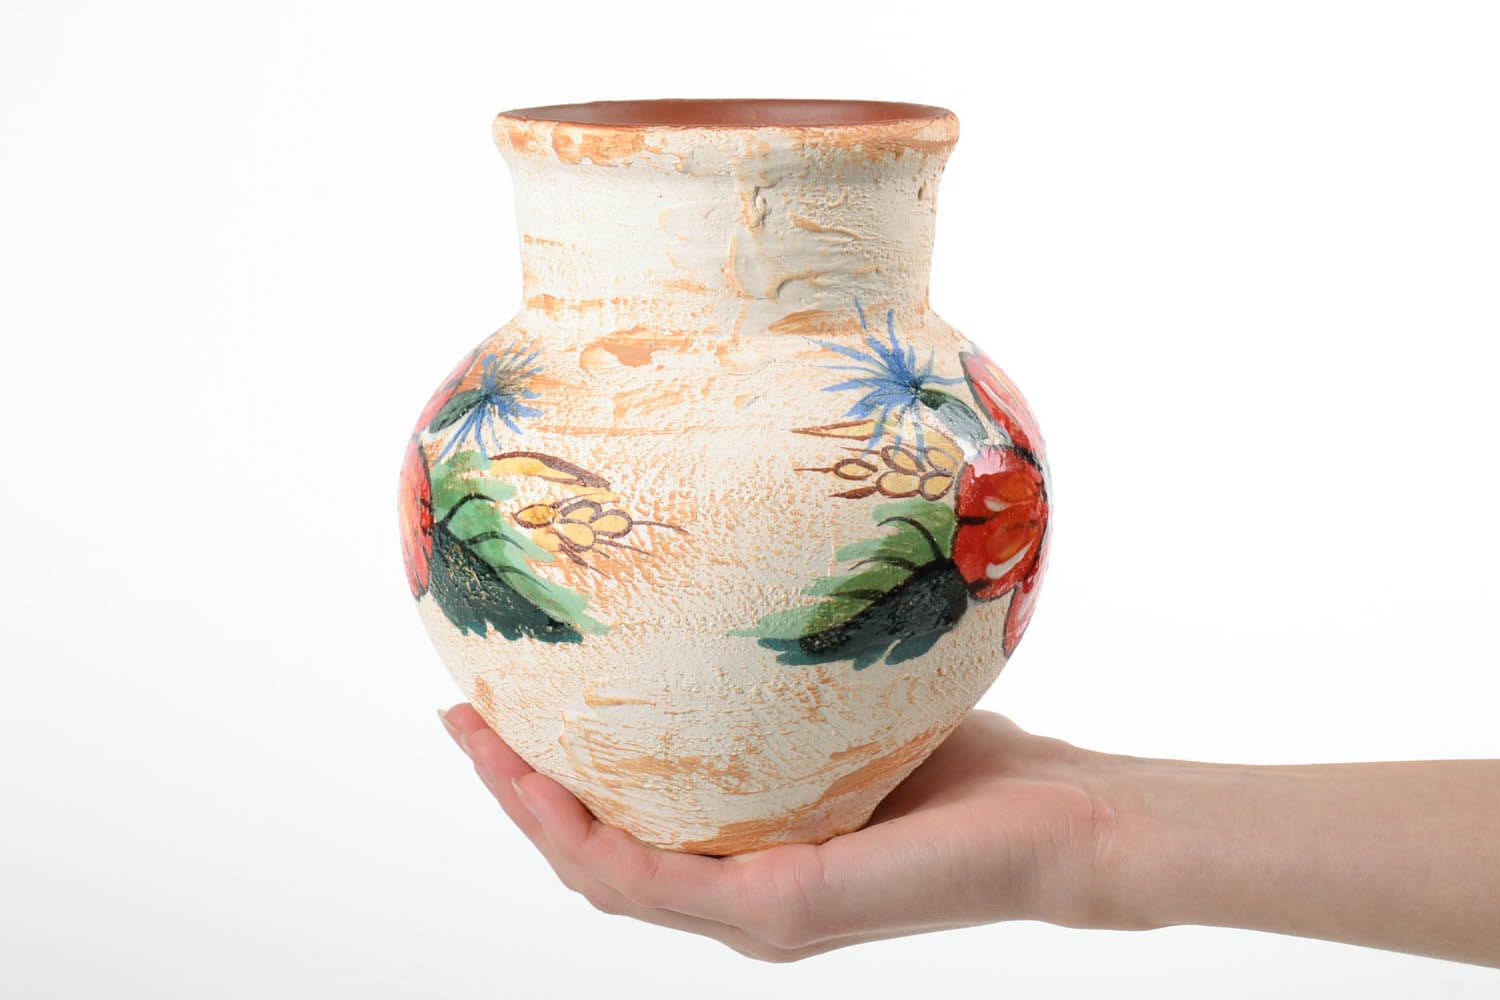 30 oz ceramic handmade village-style milk jug with floral décor 2 lb photo 2